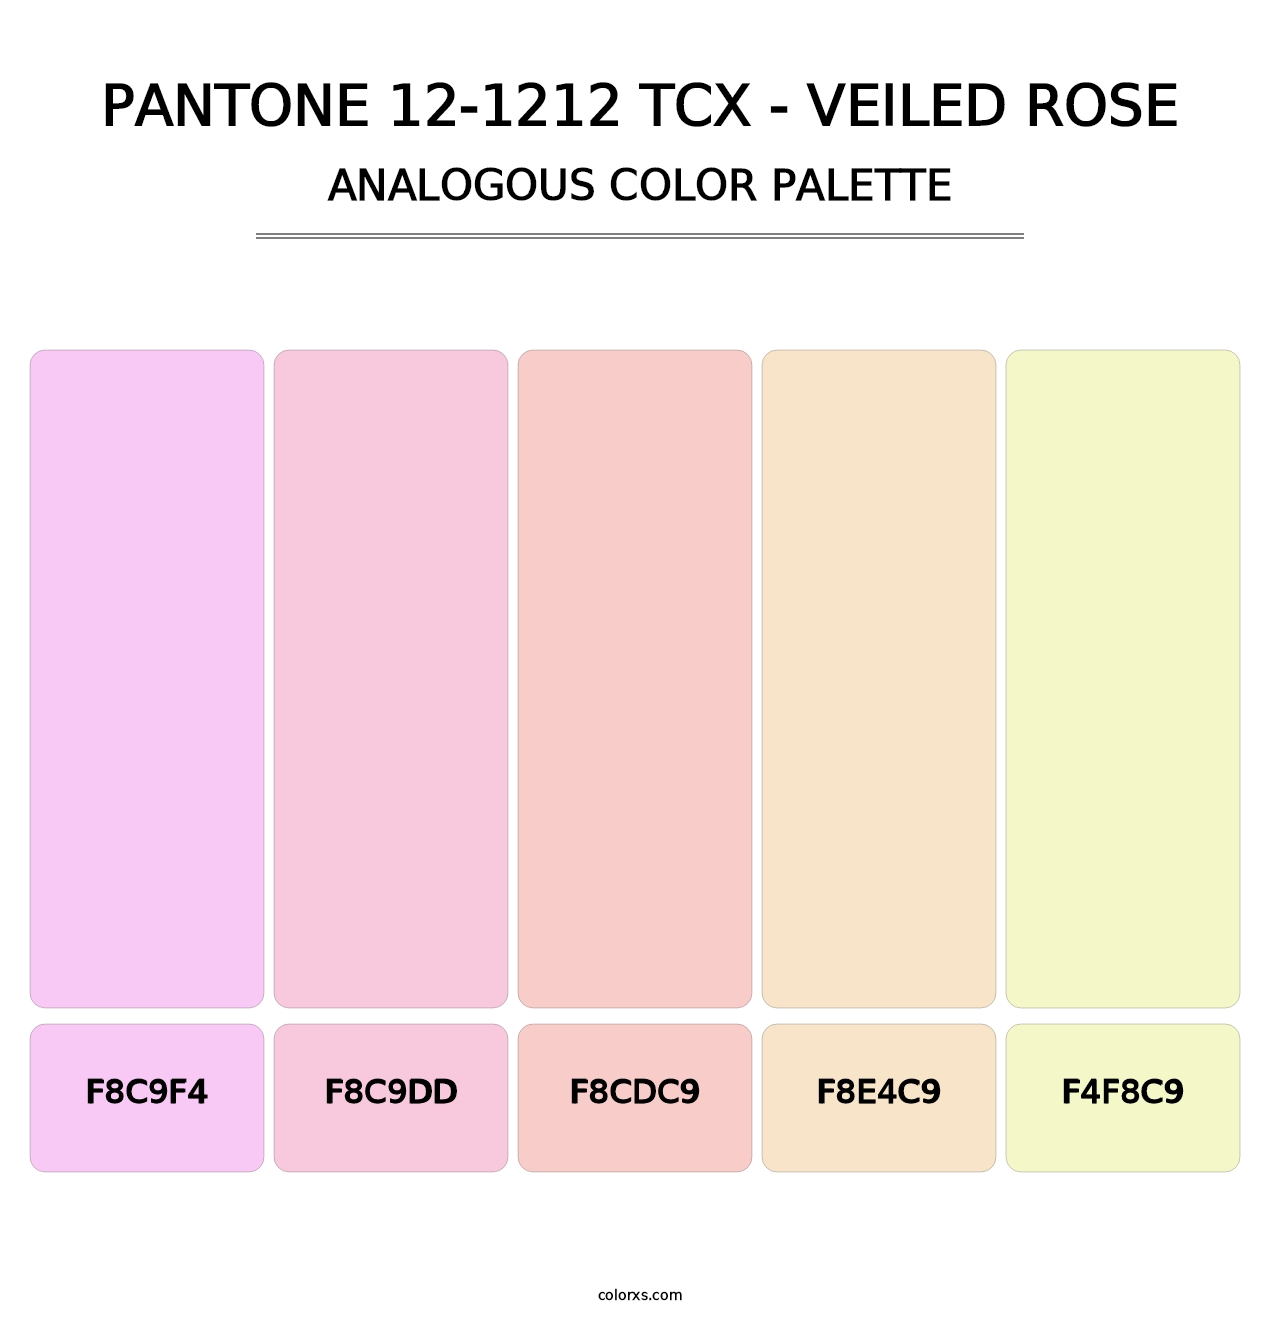 PANTONE 12-1212 TCX - Veiled Rose - Analogous Color Palette